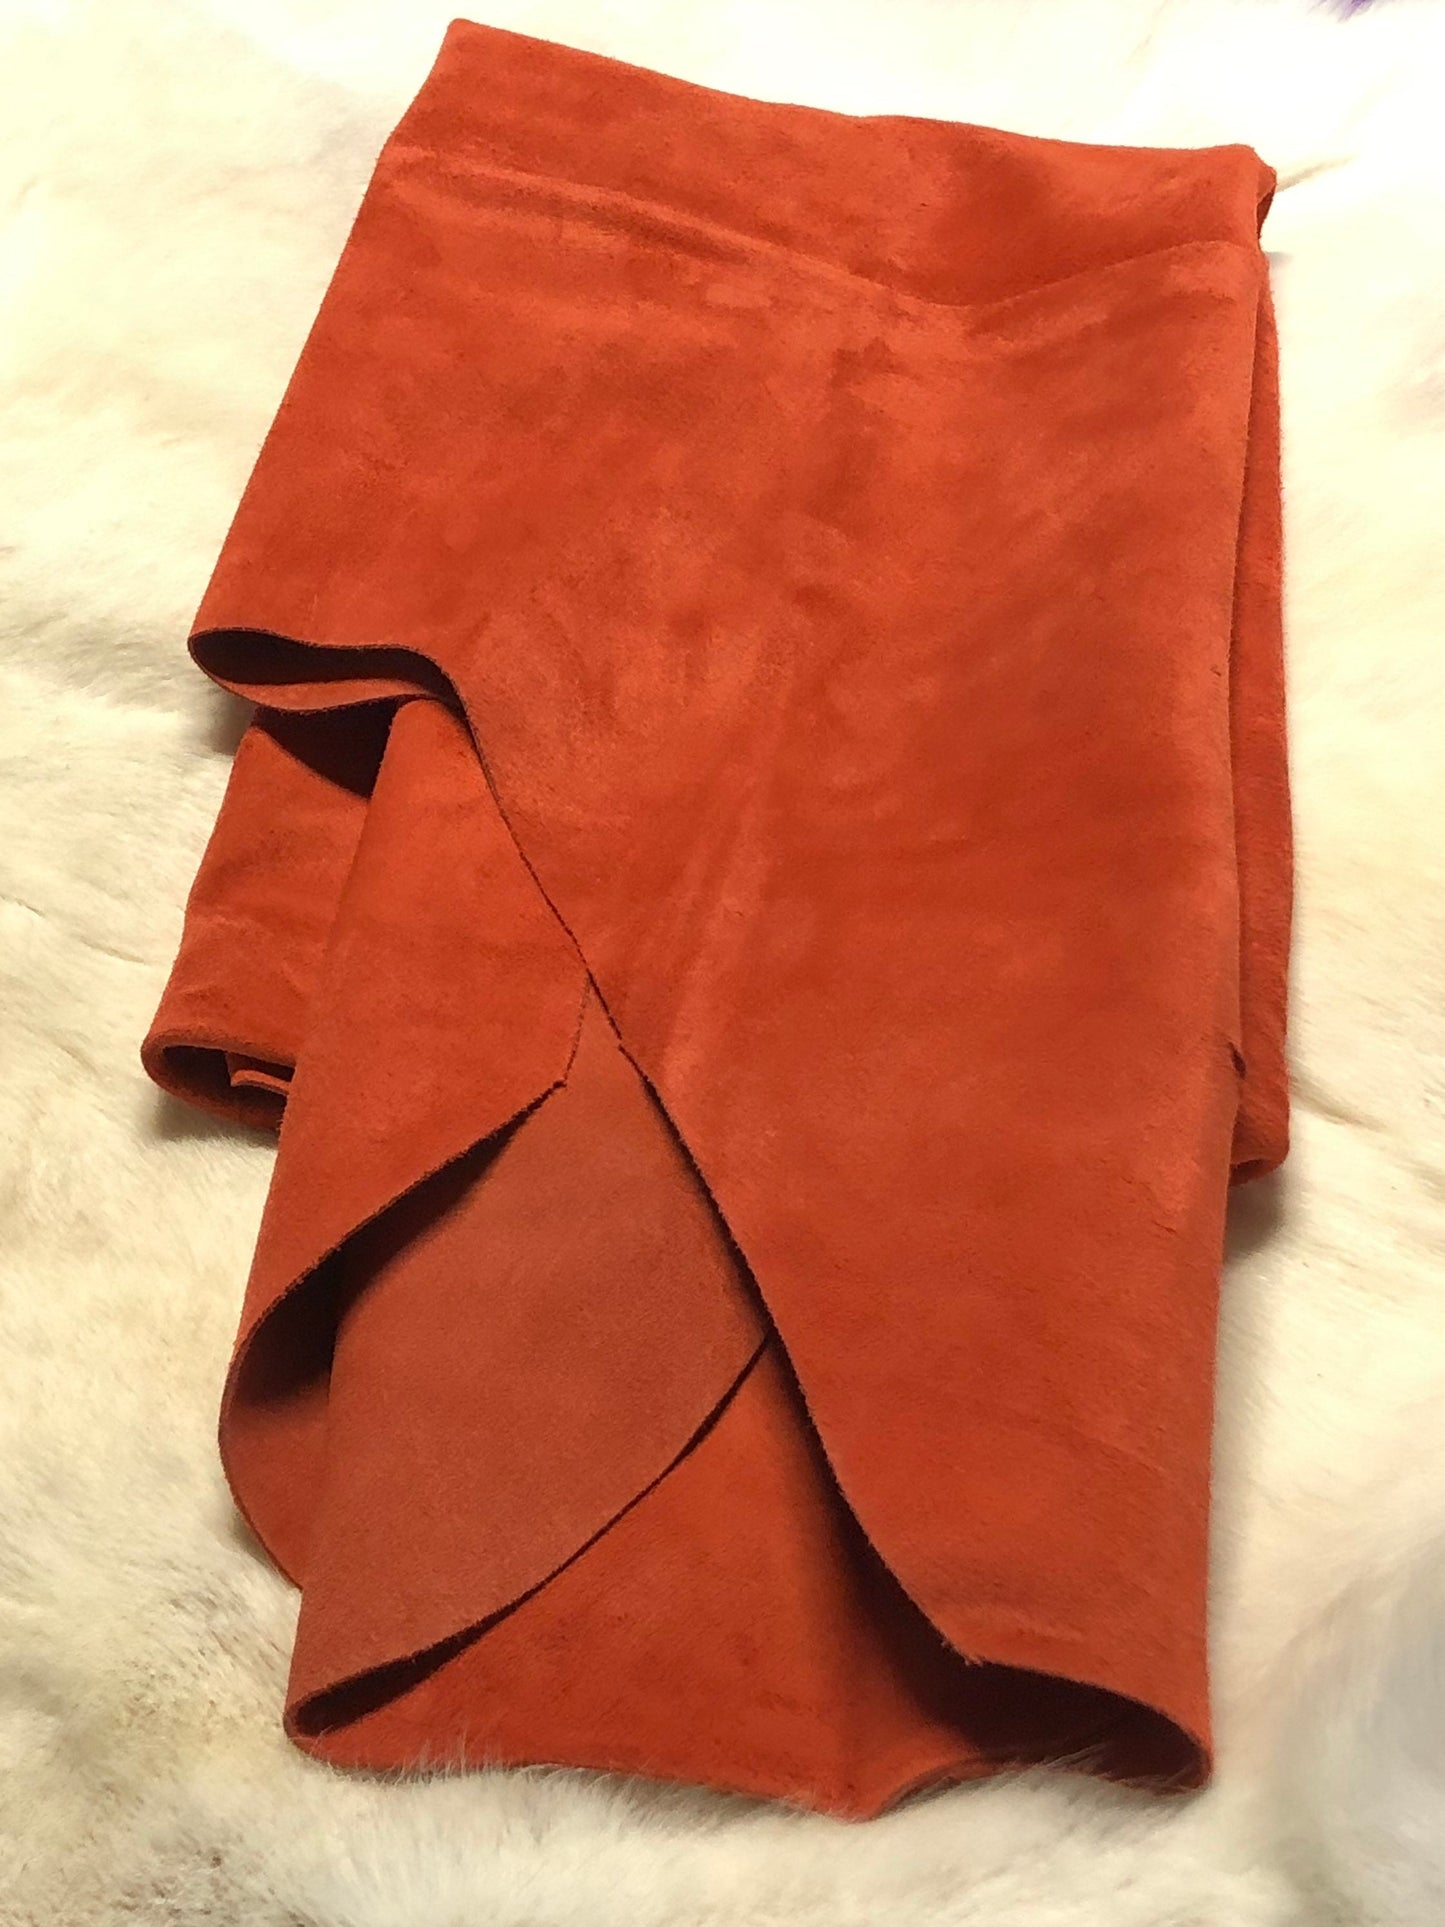 Orange Suede Designer leather - Raw Leather - Wholesale Leather 2-4oz